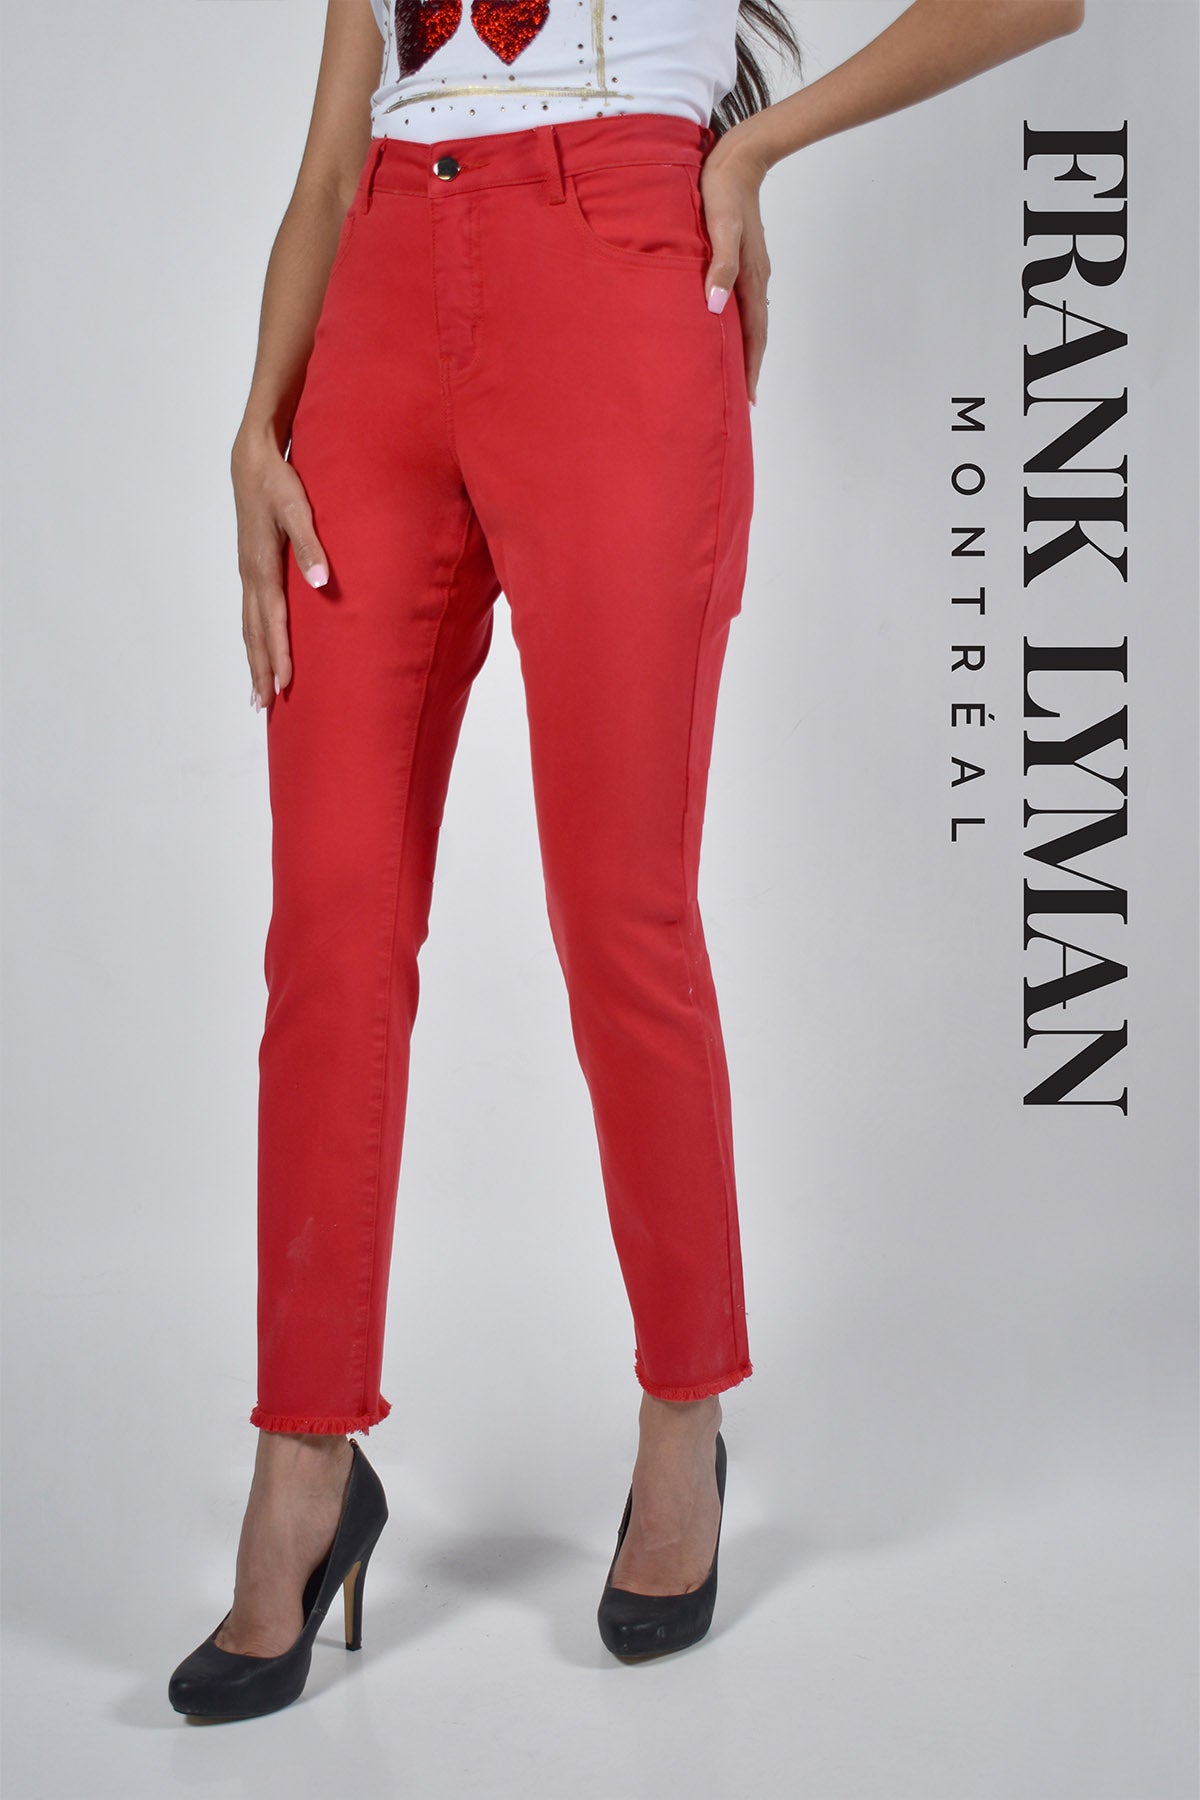 Frank Lyman Montreal Jeans-Buy Frank Lyman Montreal Jeans Online-Frank Lyman Montreal Online Shop-Frank Lyman Montreal Red Jeans